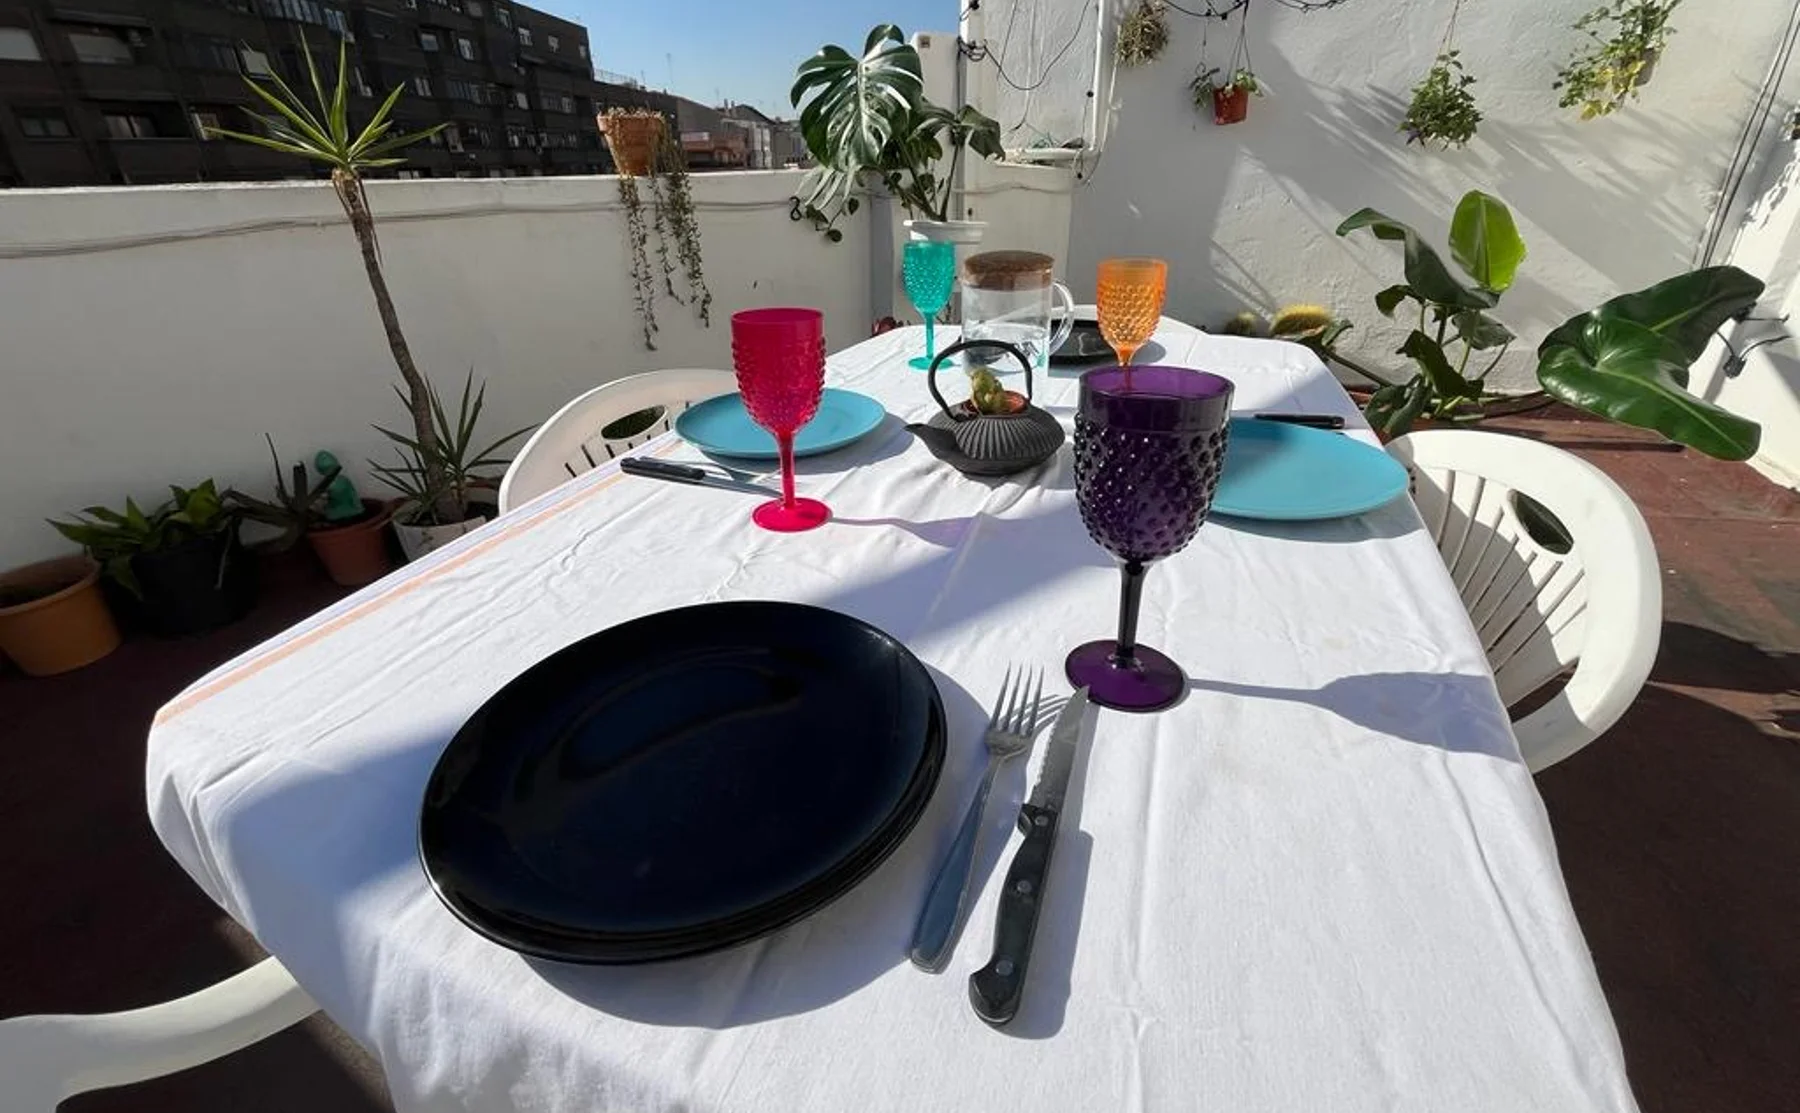 Paella cooking class on a splendid terrace in the sun - 1546958